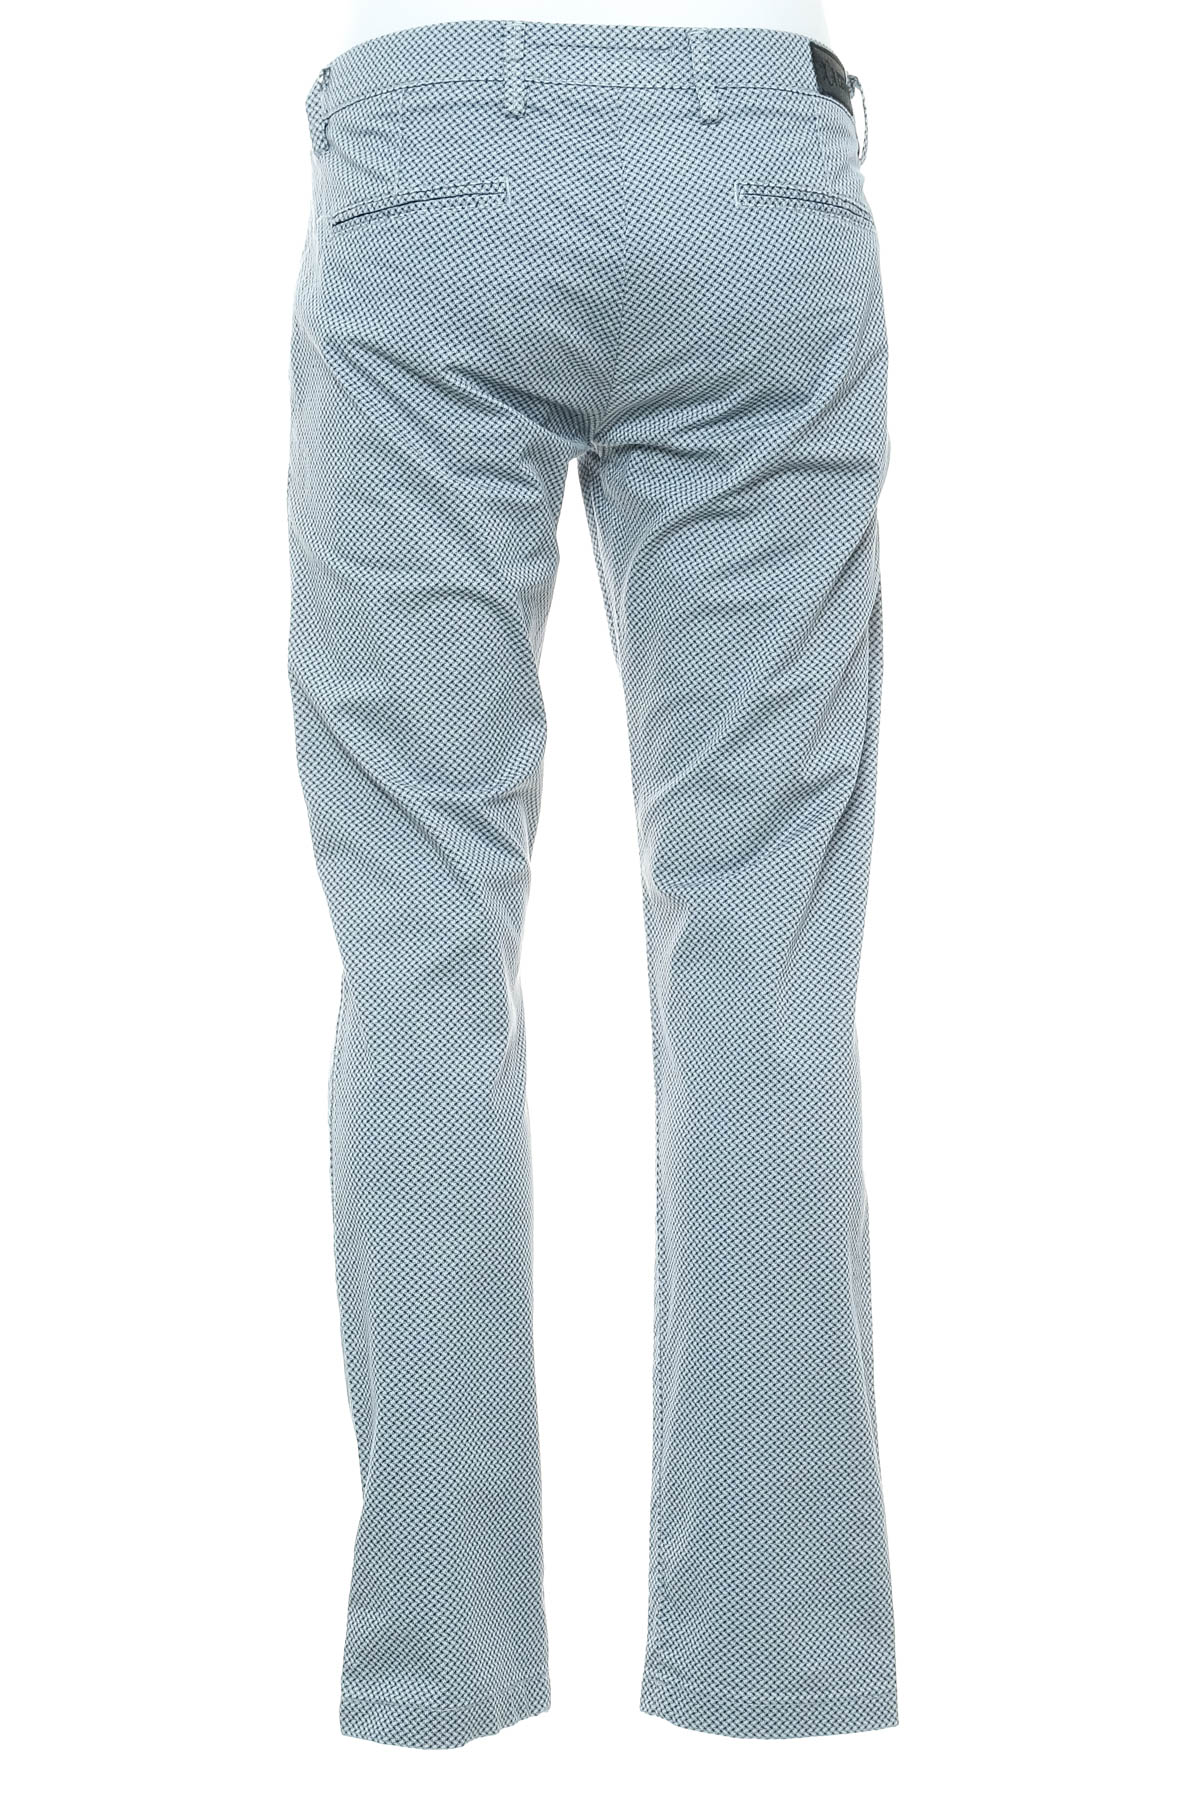 Men's trousers - SARTORIA LEONI - 1